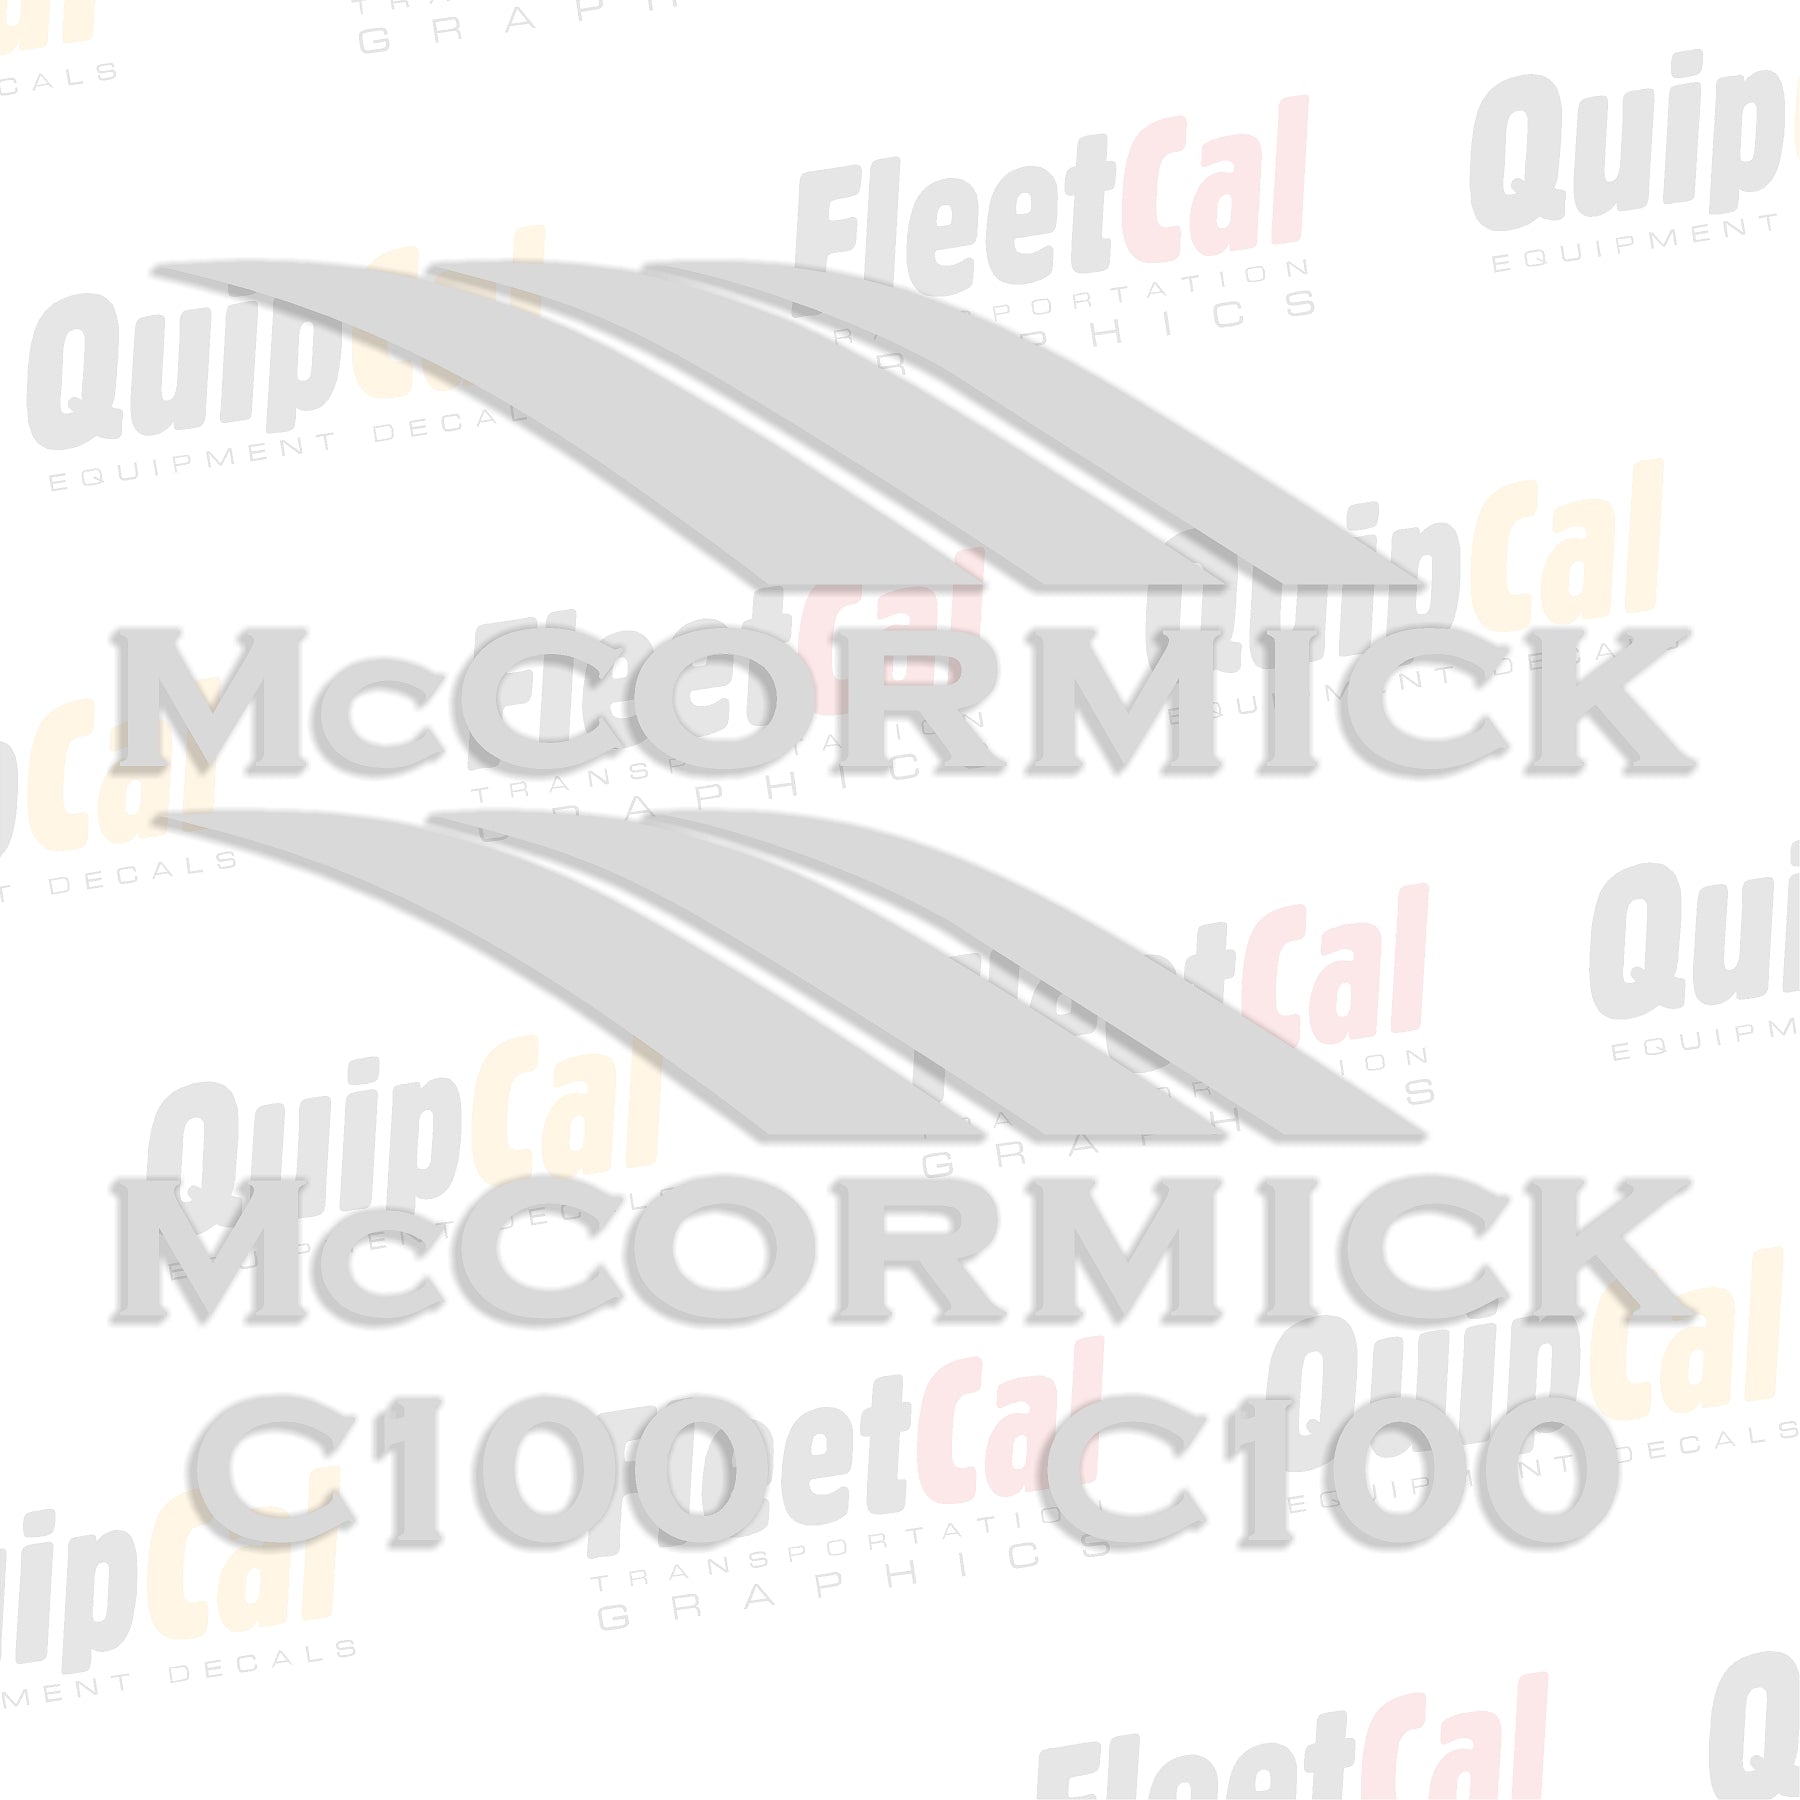 McCormick Tractor Decal Set